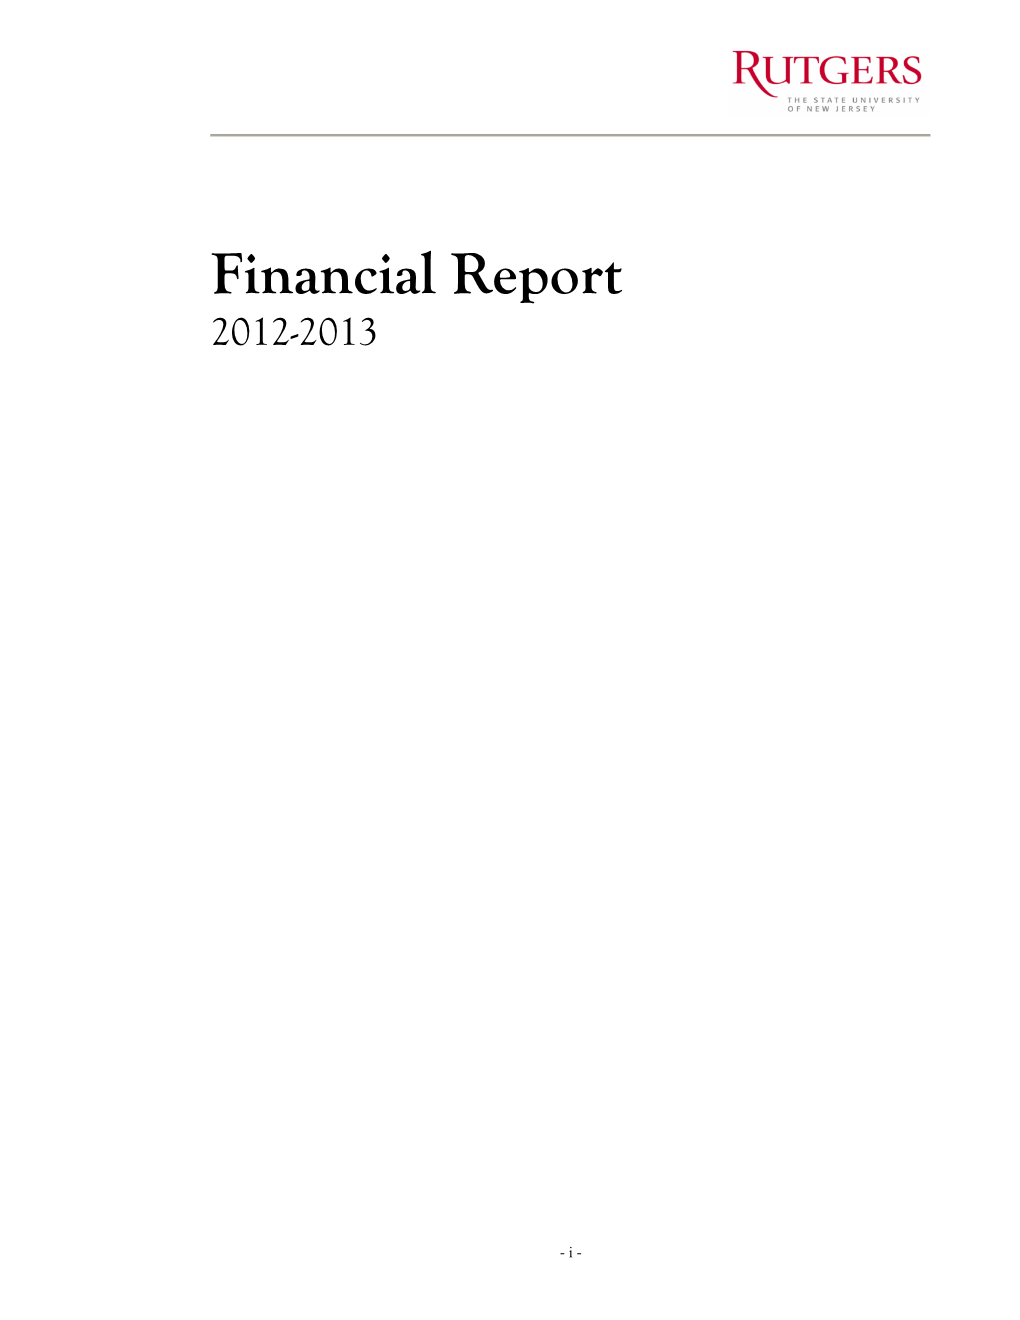 Financial Report 2012-2013